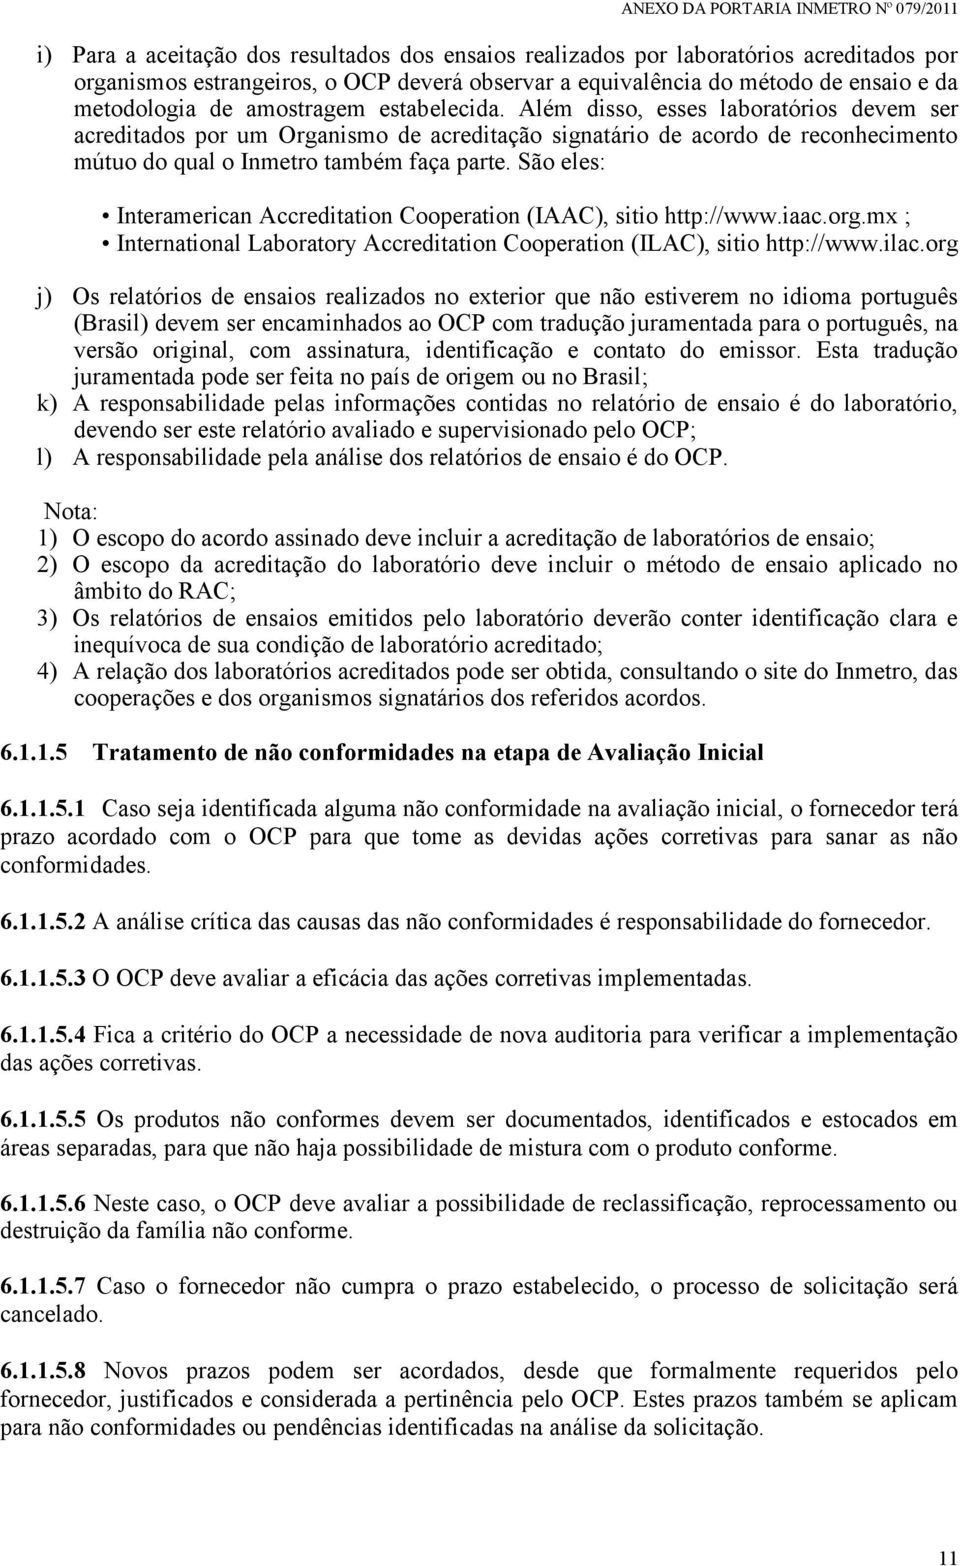 São eles: Interamerican Accreditation Cooperation (IAAC), sitio http://www.iaac.org.mx ; International Laboratory Accreditation Cooperation (ILAC), sitio http://www.ilac.